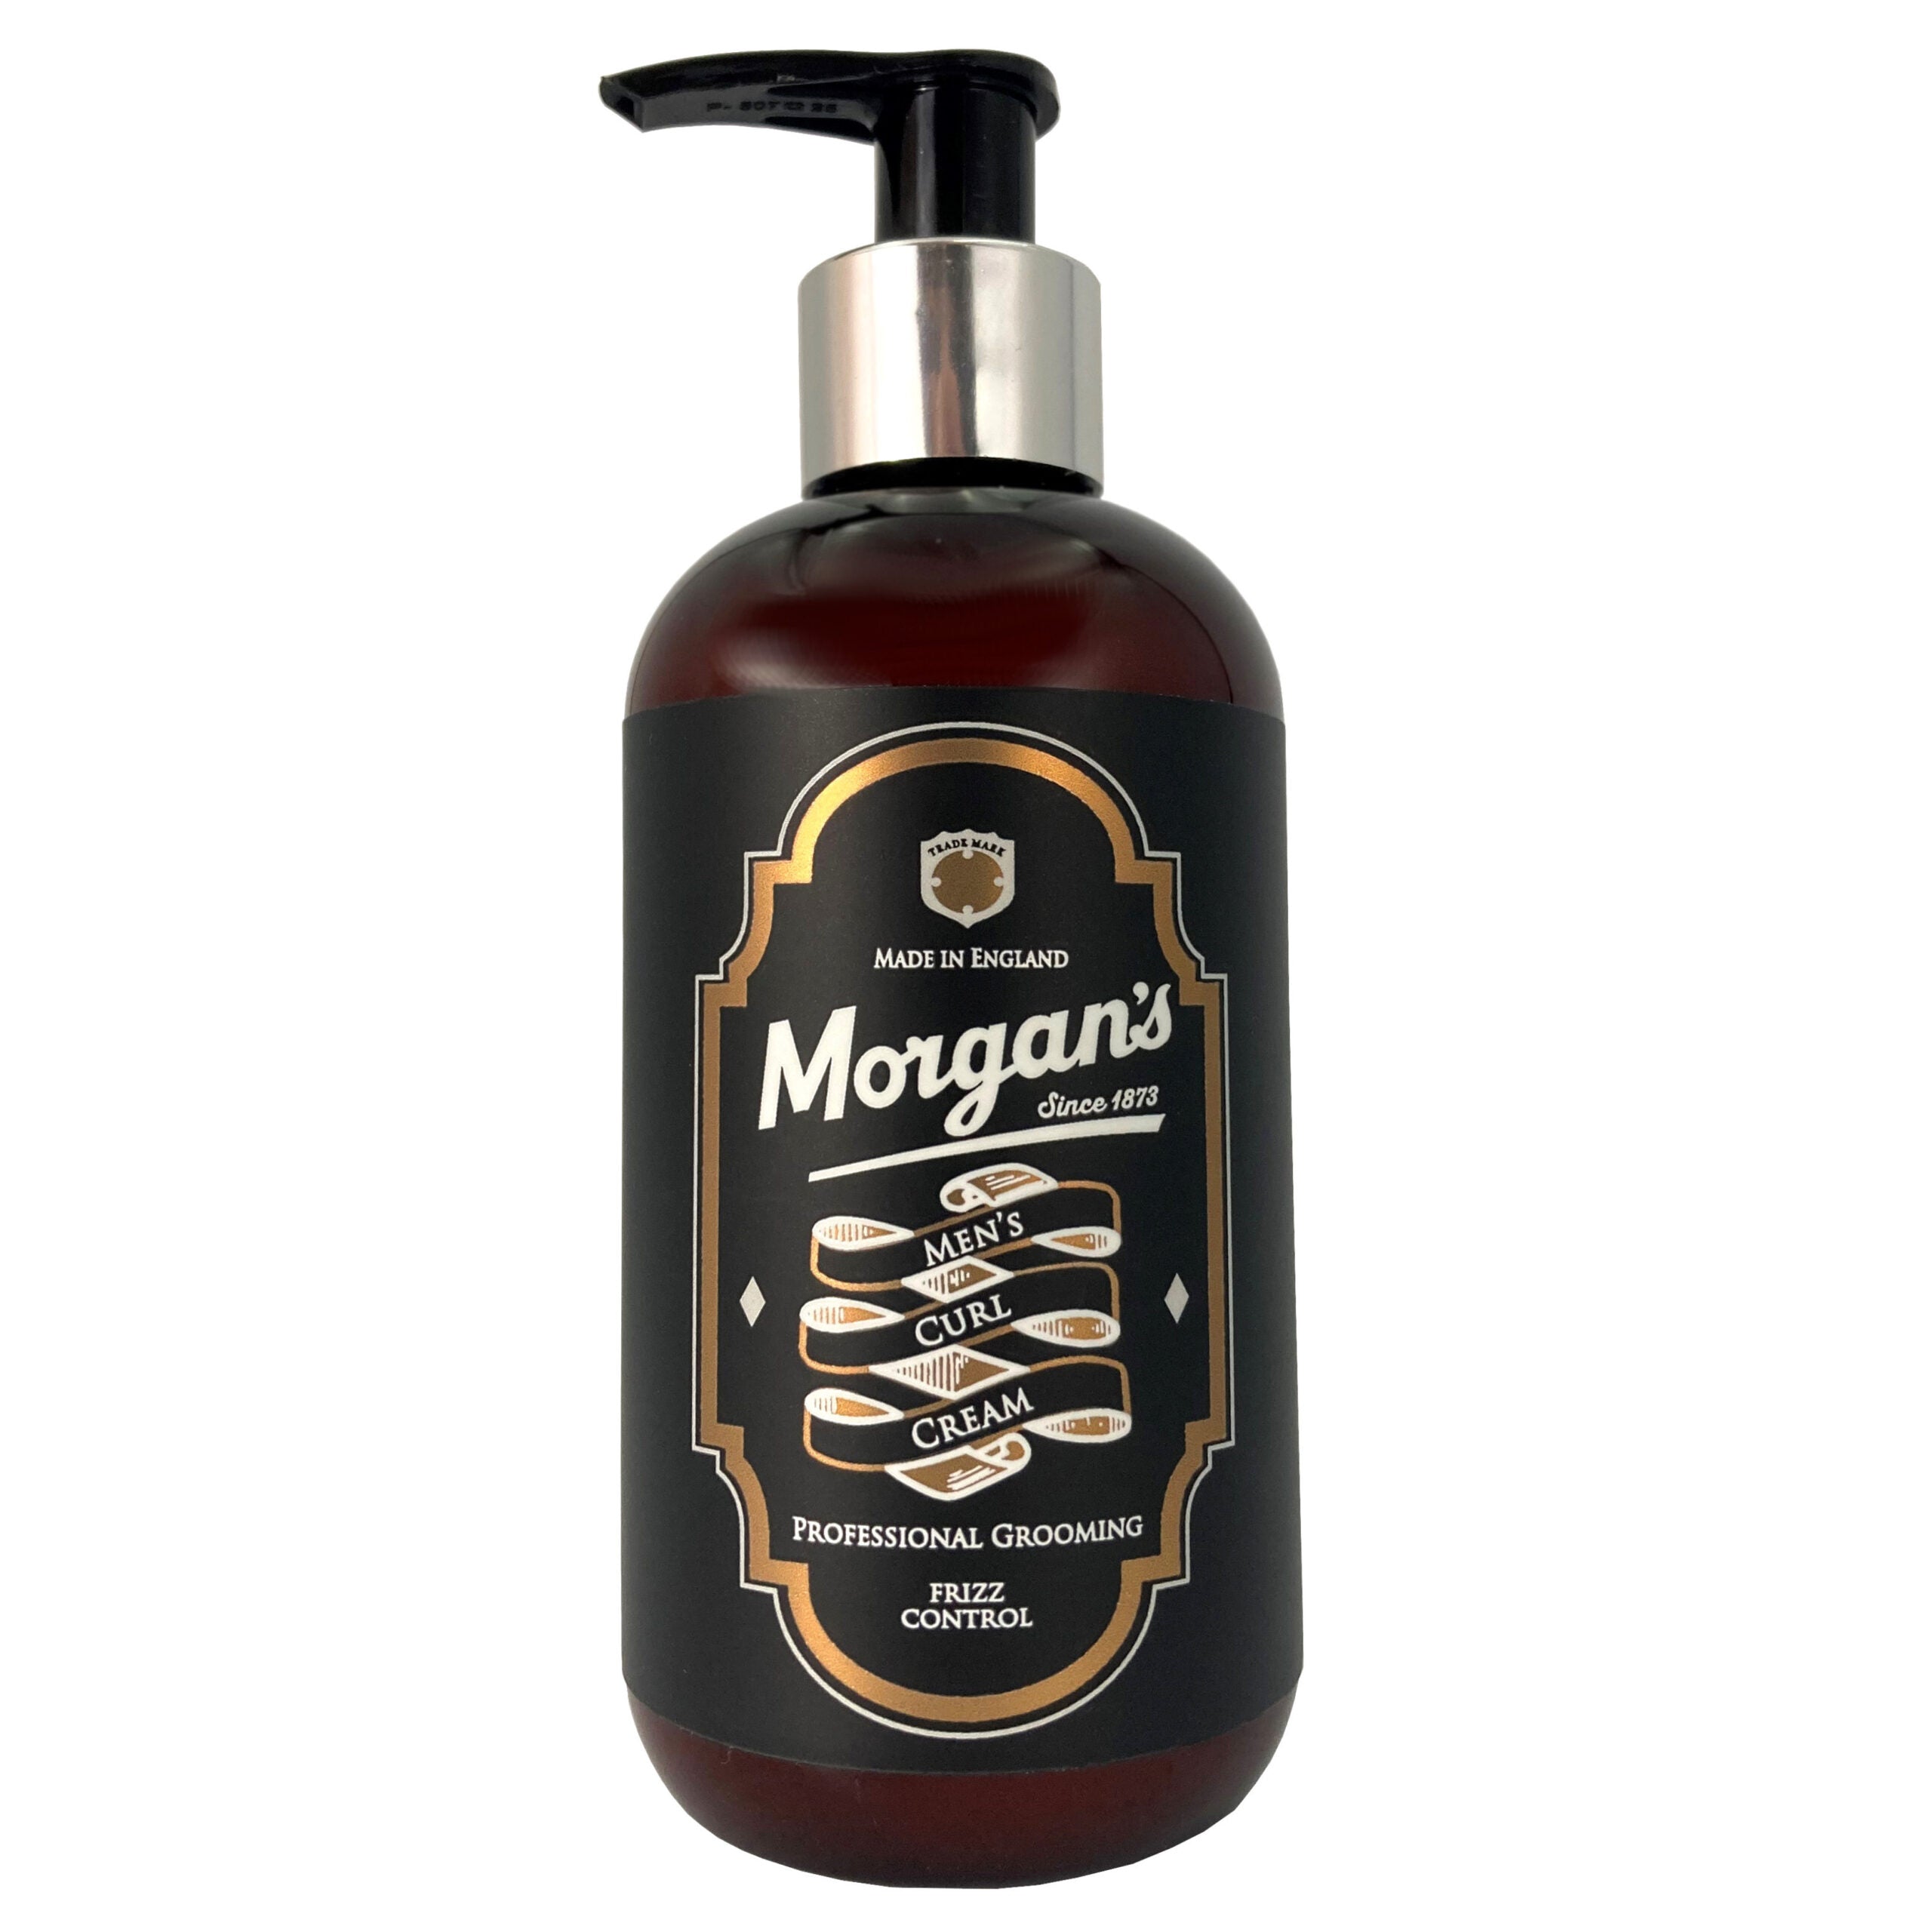 Morgan's Men's Curl Cream